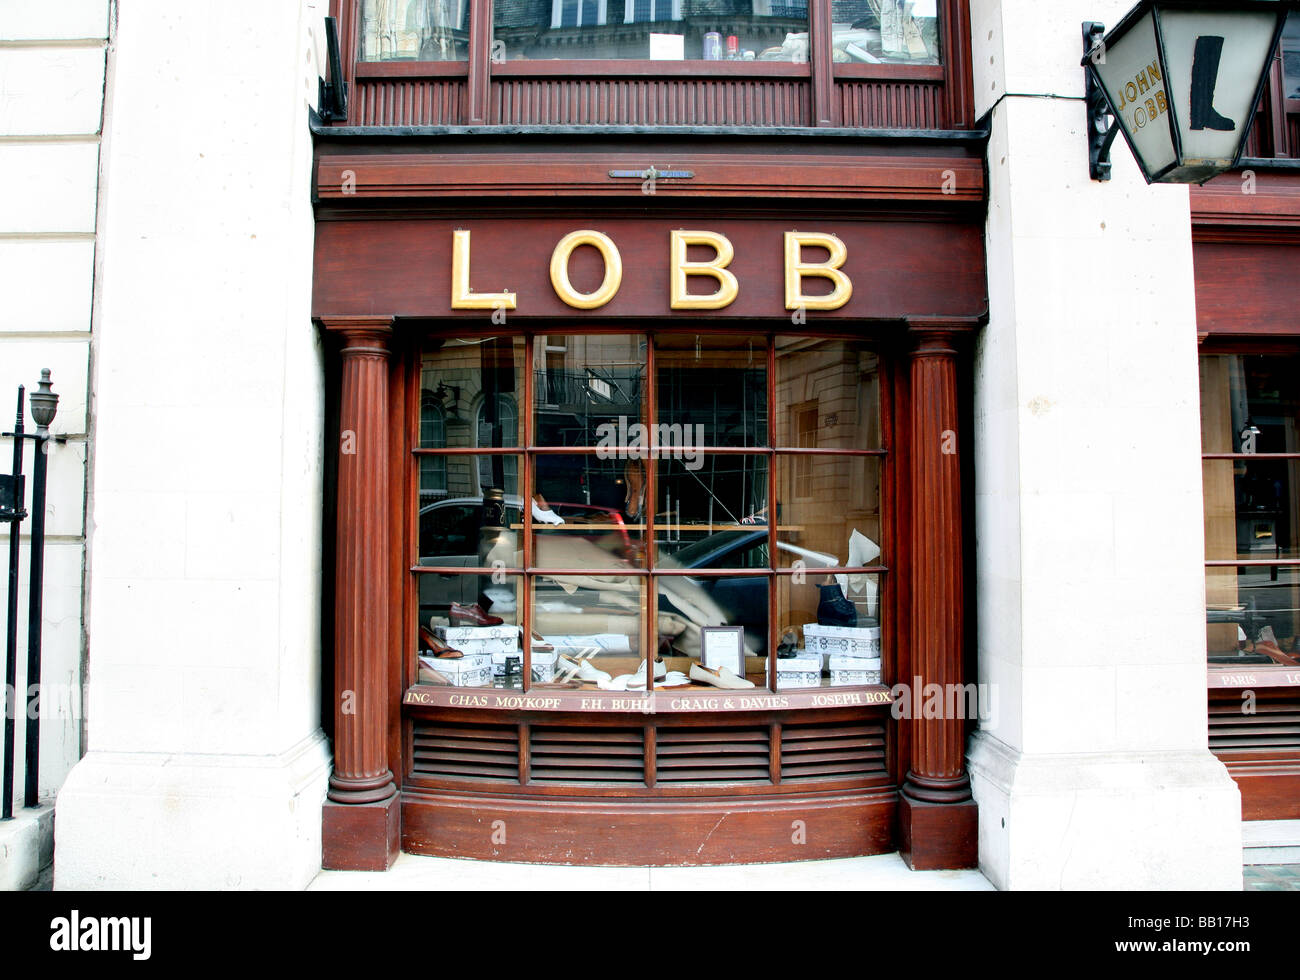 Lobb bespoke calzolai London SW1 Foto Stock